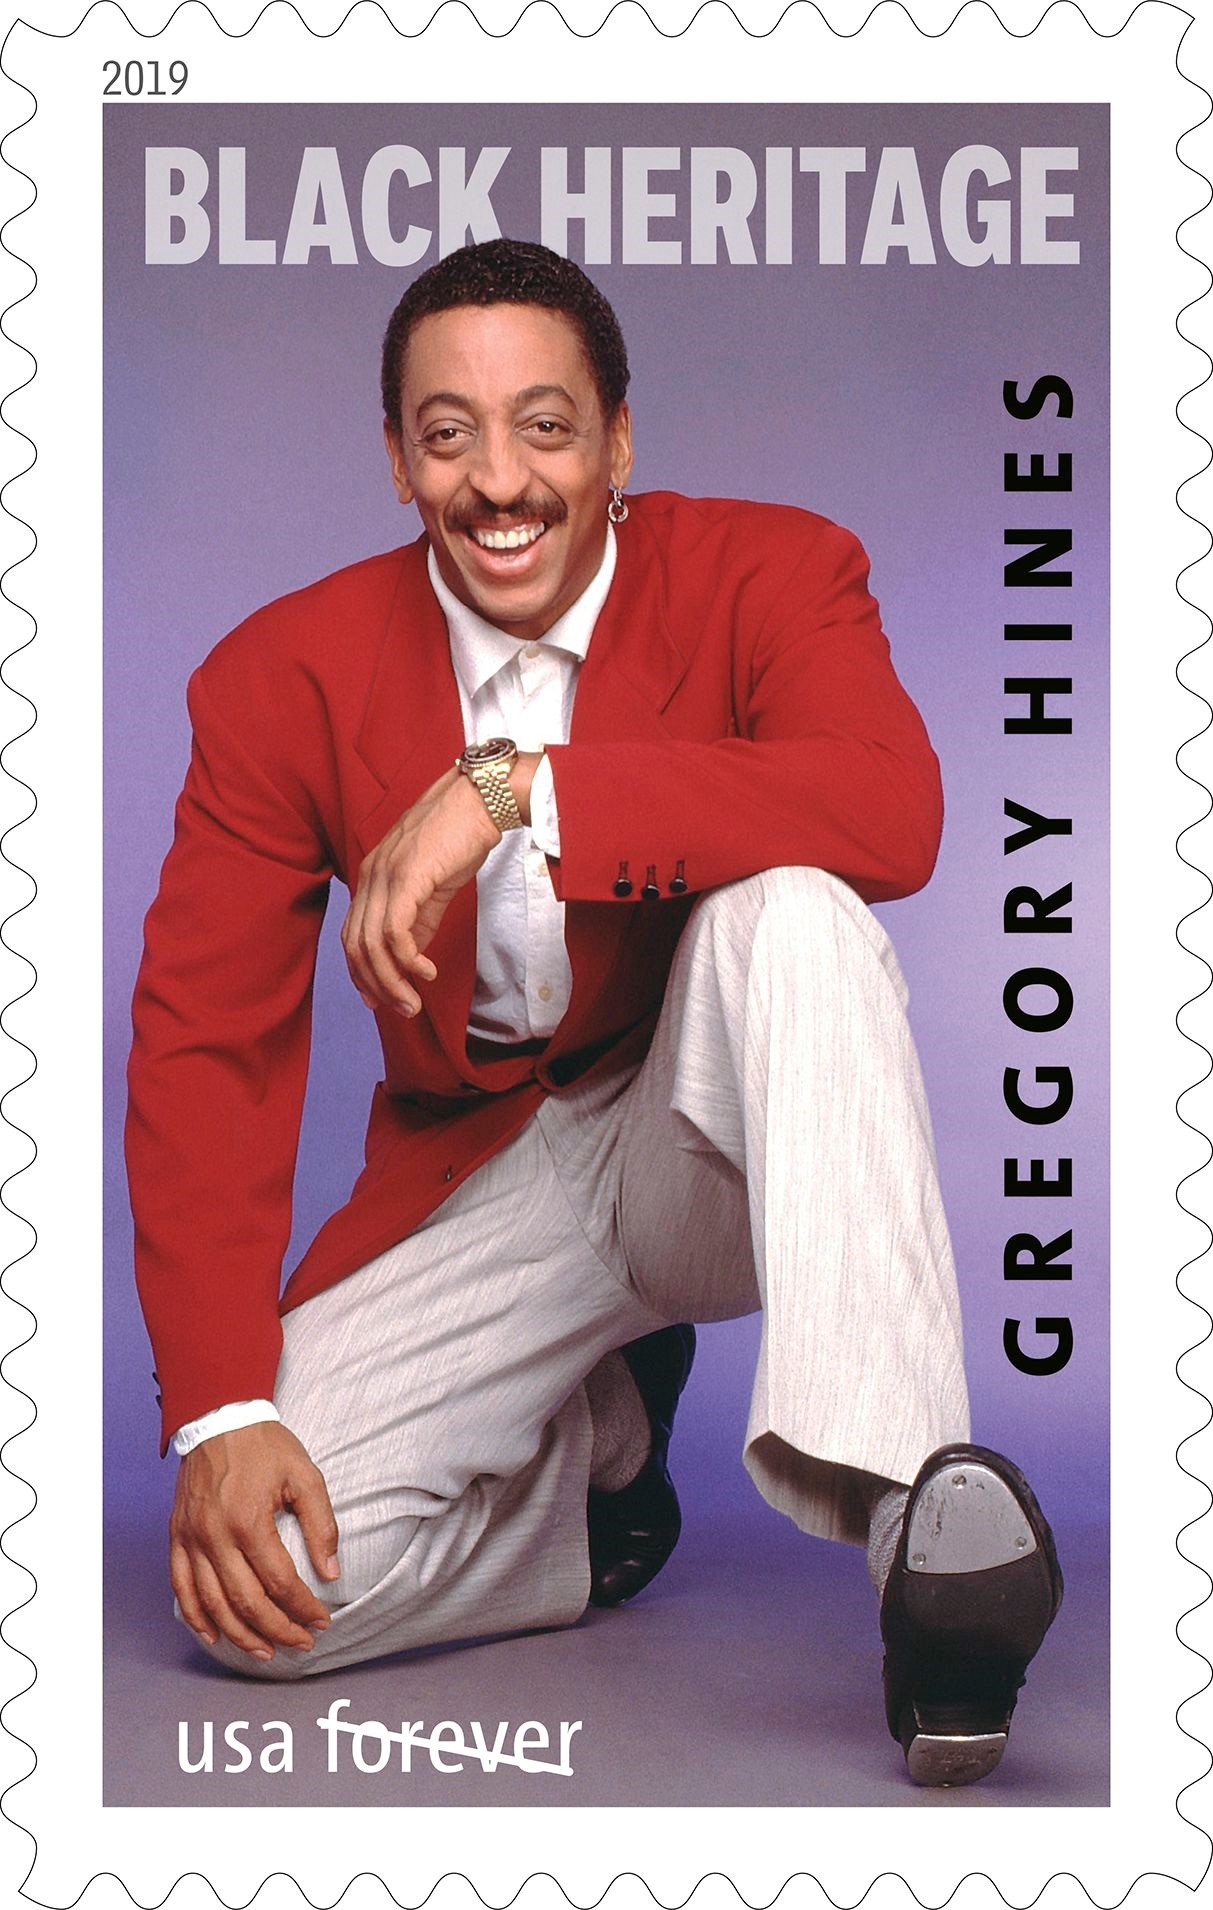 Black Heritage Stamp series - Gregory Hines Forever stamp